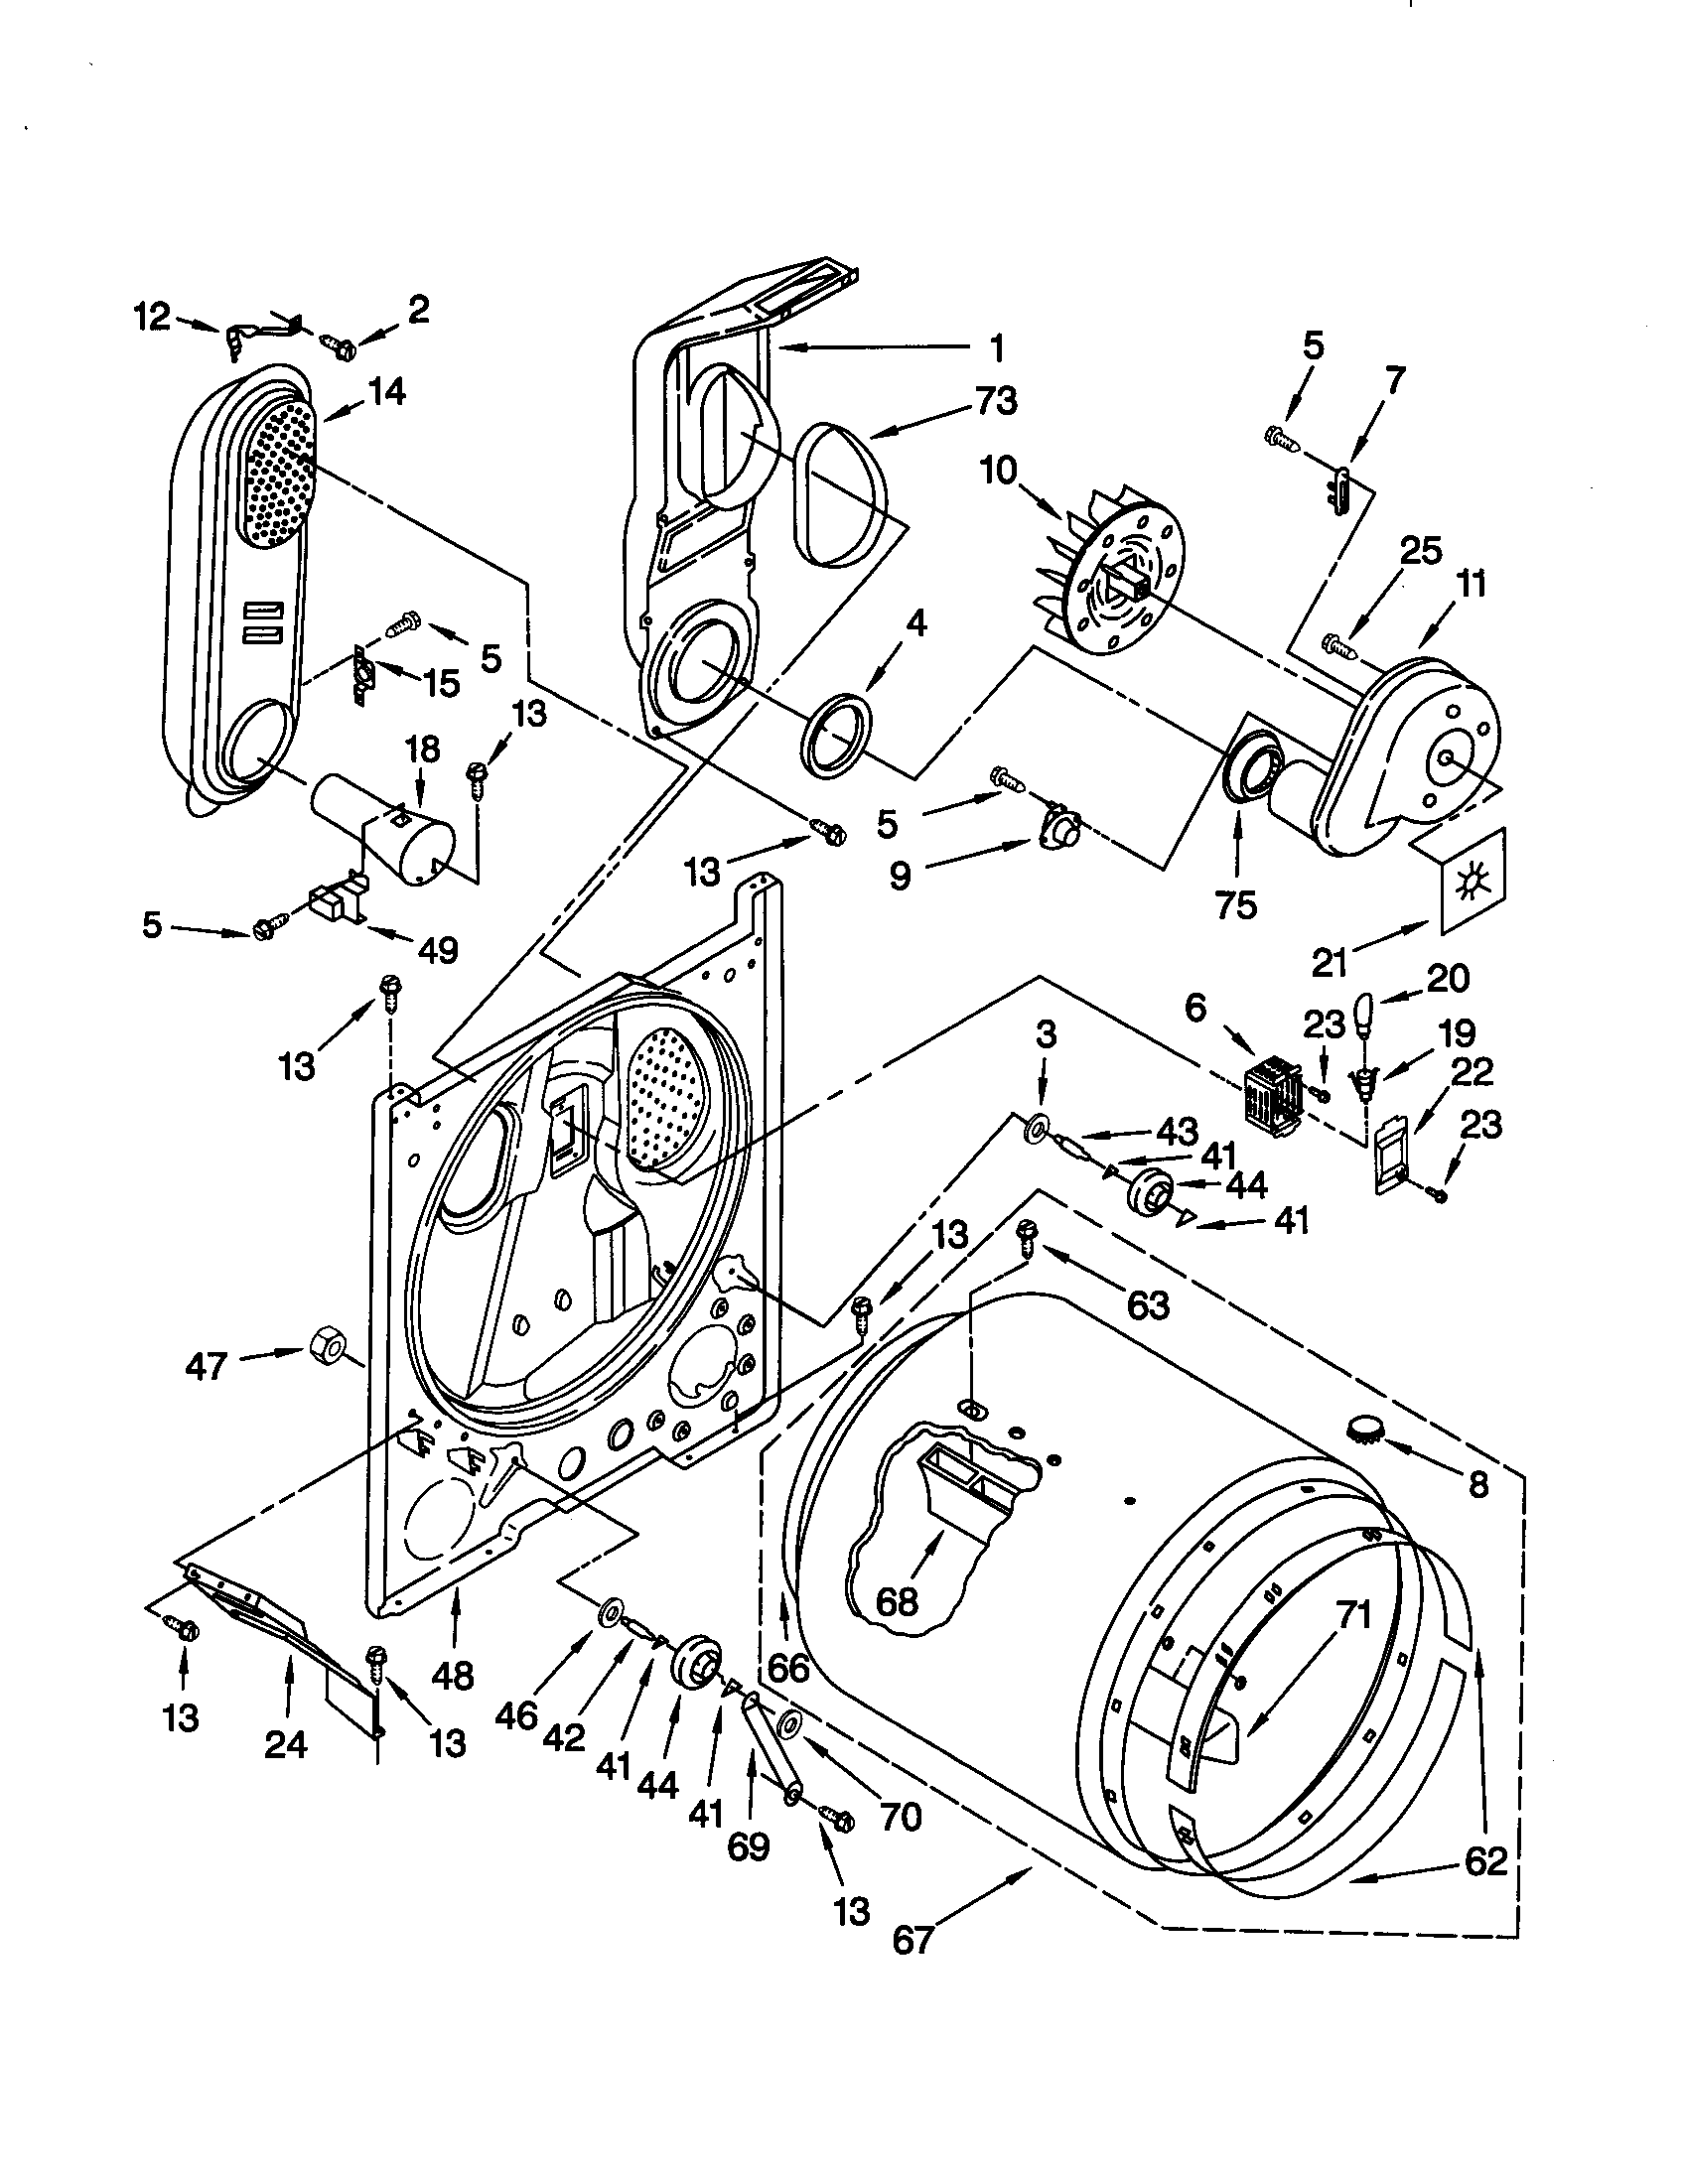 Whirlpool Parts: Whirlpool Cabrio Dryer Parts List